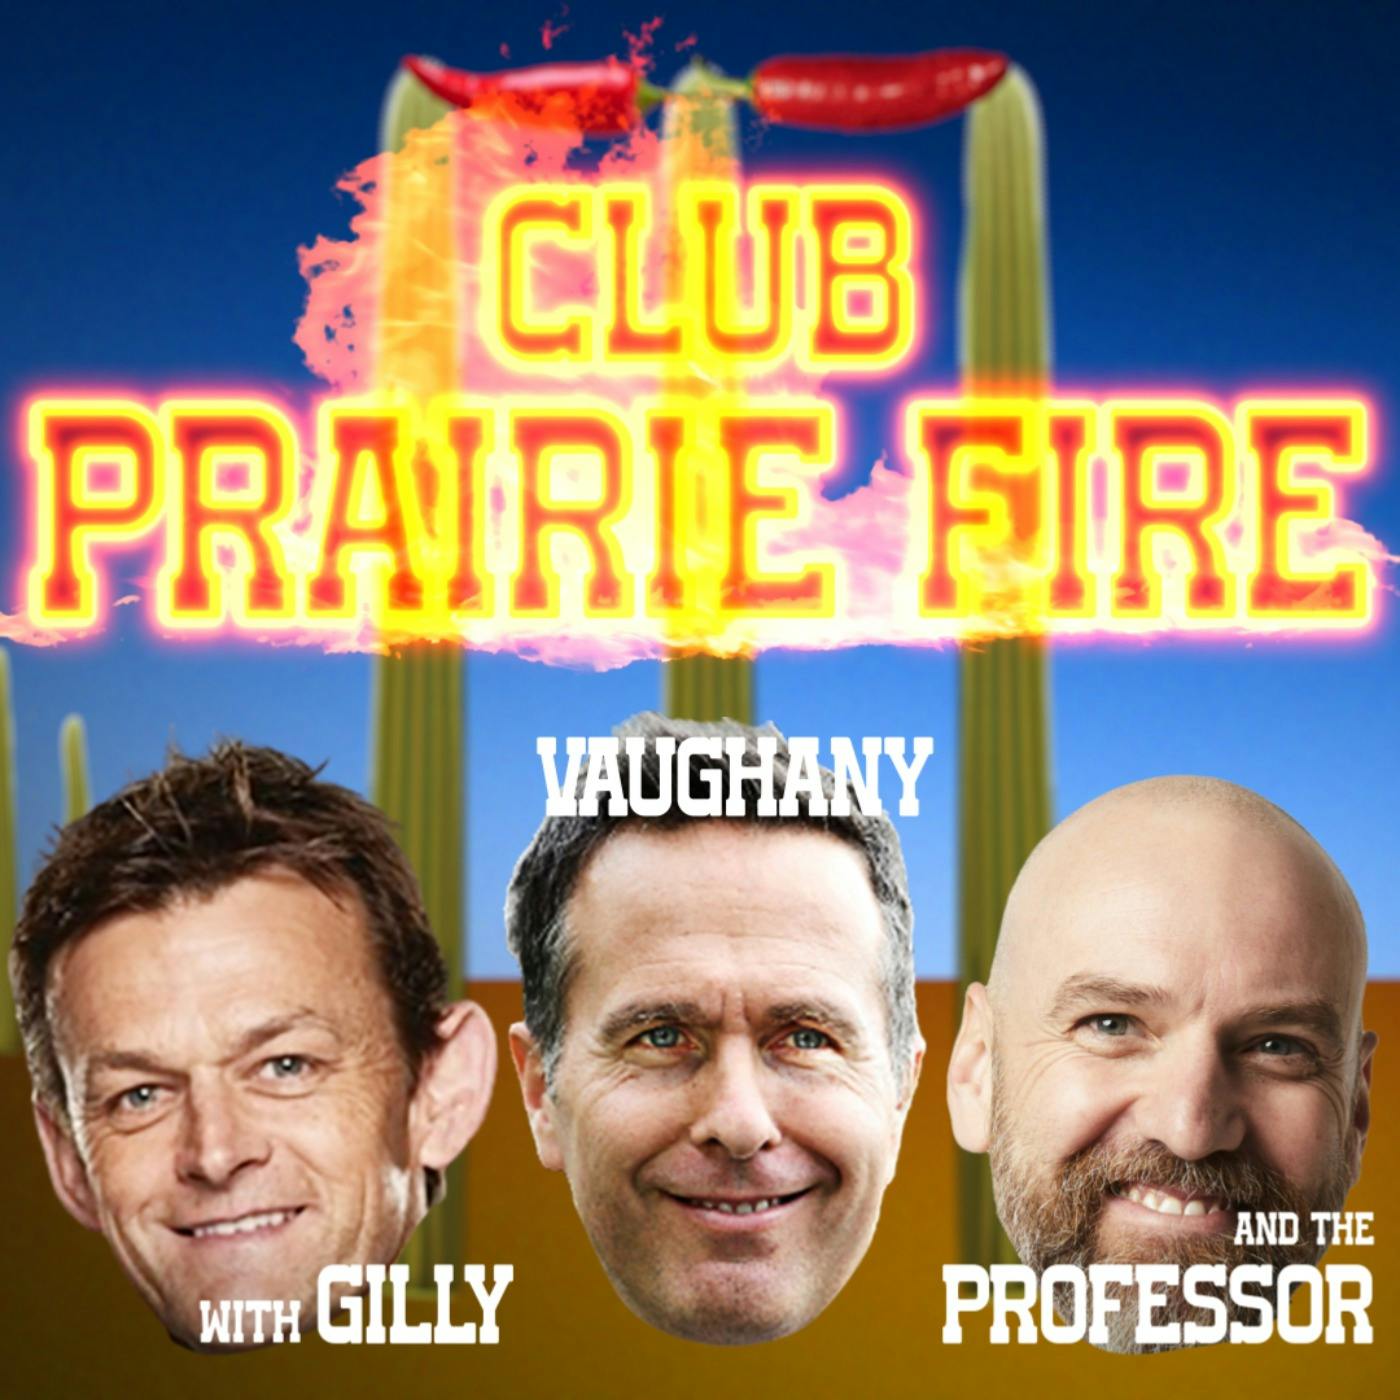 West Indian cricket legend Brian Lara joins Club Prairie Fire